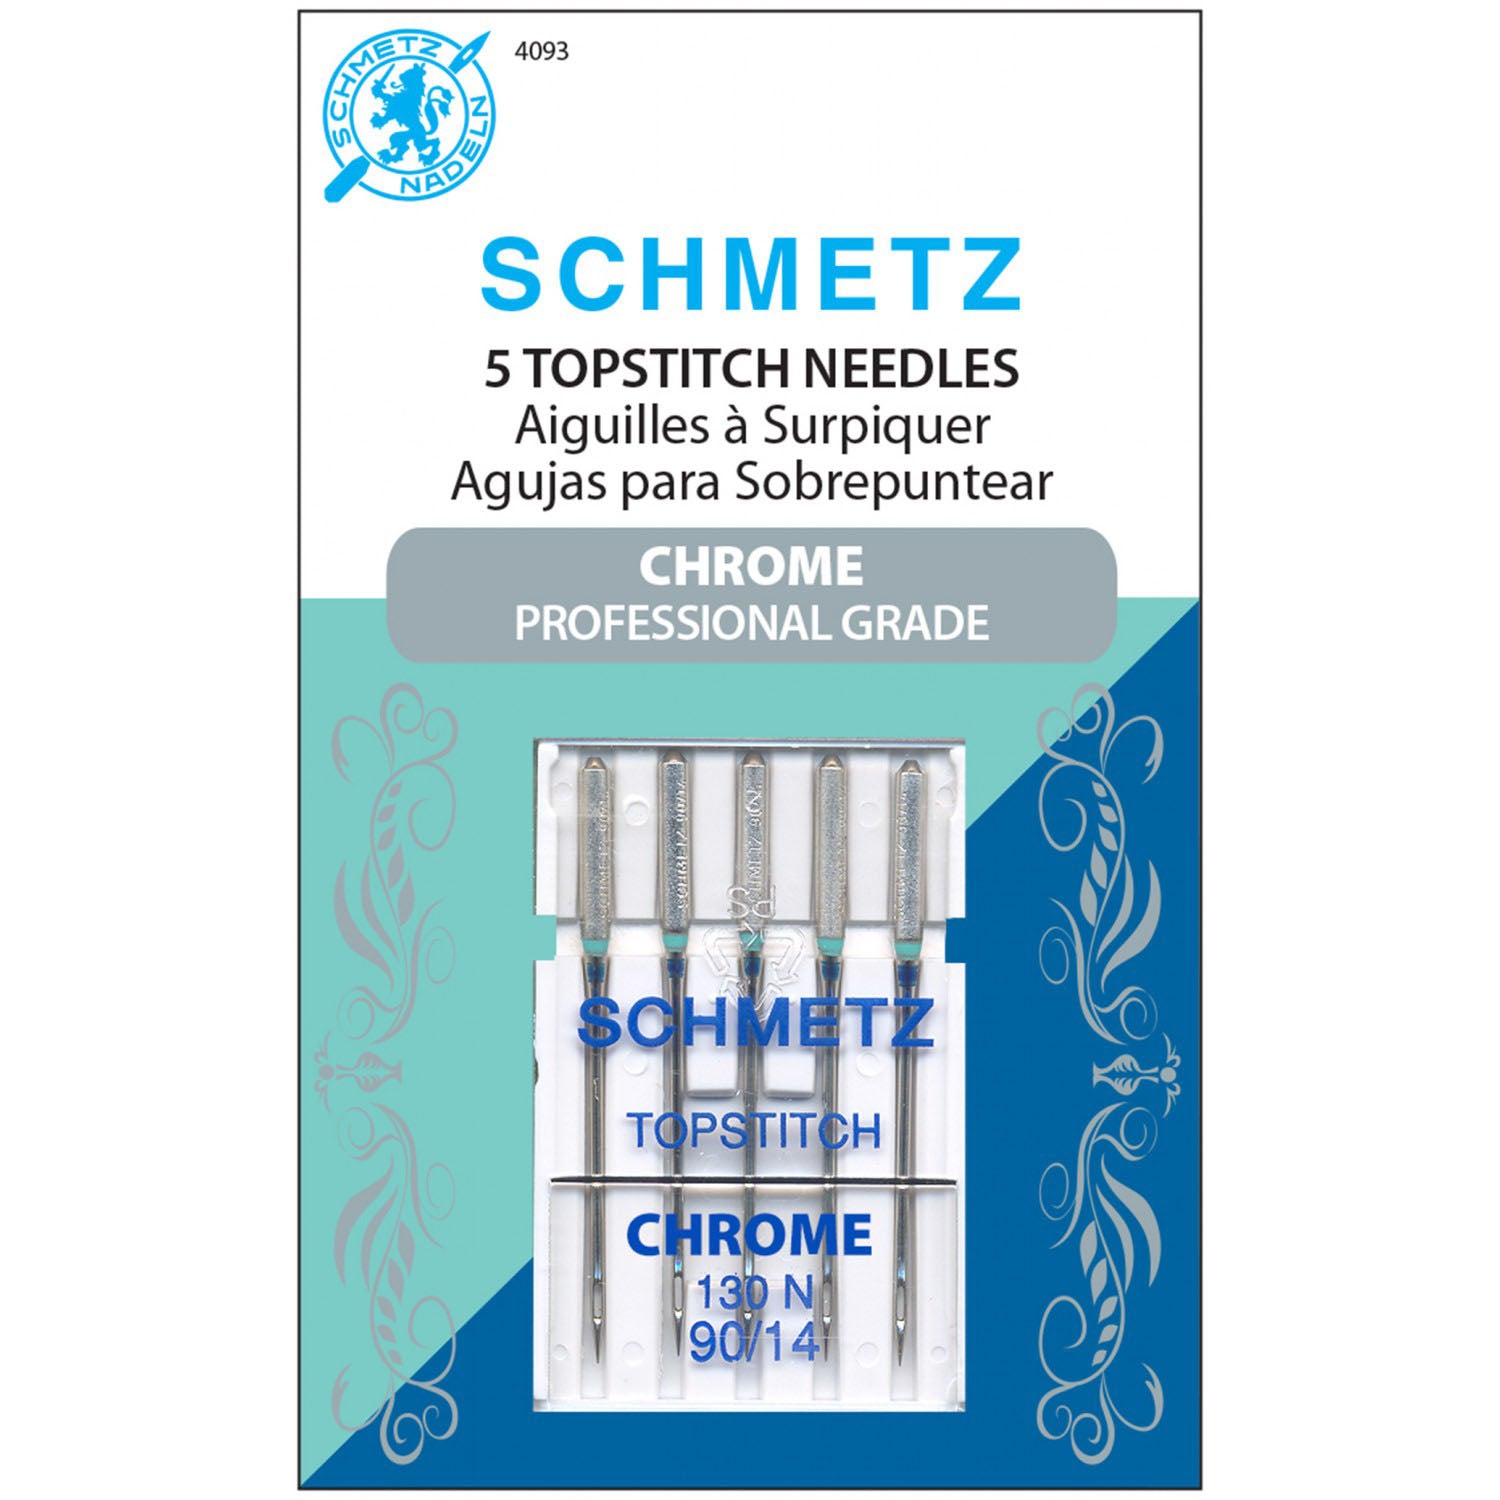 Schmetz Chrome Topstitch Needles - 90/14